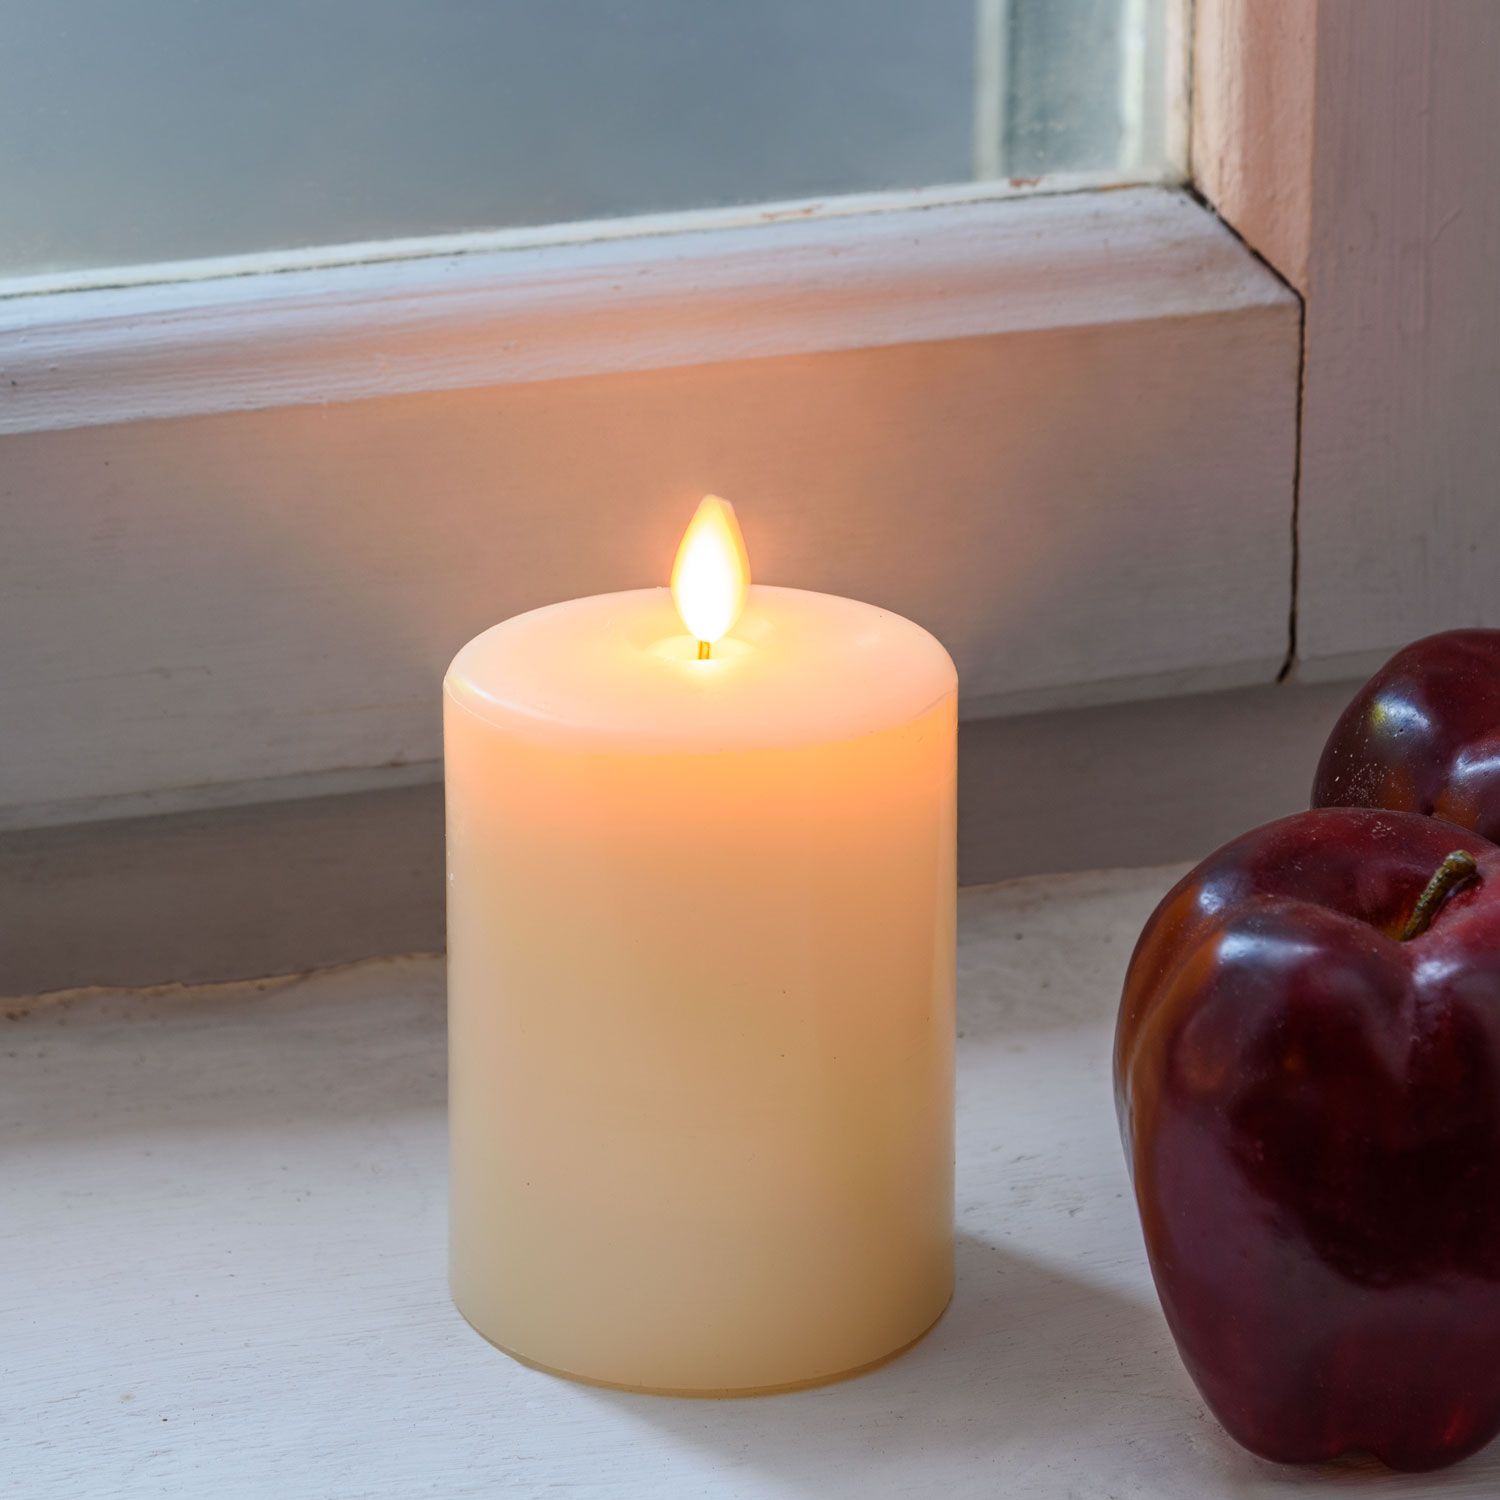 LED Kerze mit Docht elfenbeinfarben, glatt, h 10 cm, Ø 7,5 cm, warmweiß